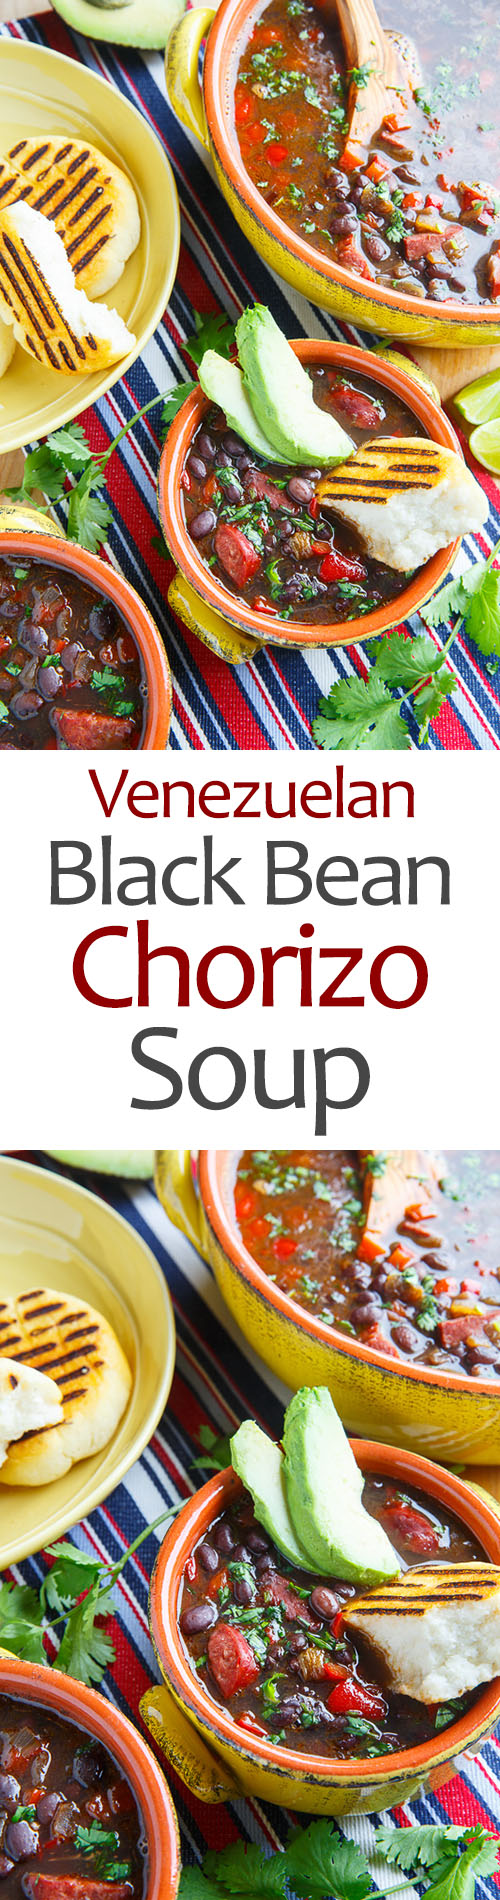 Venezuelan Black Bean and Chorizo Soup